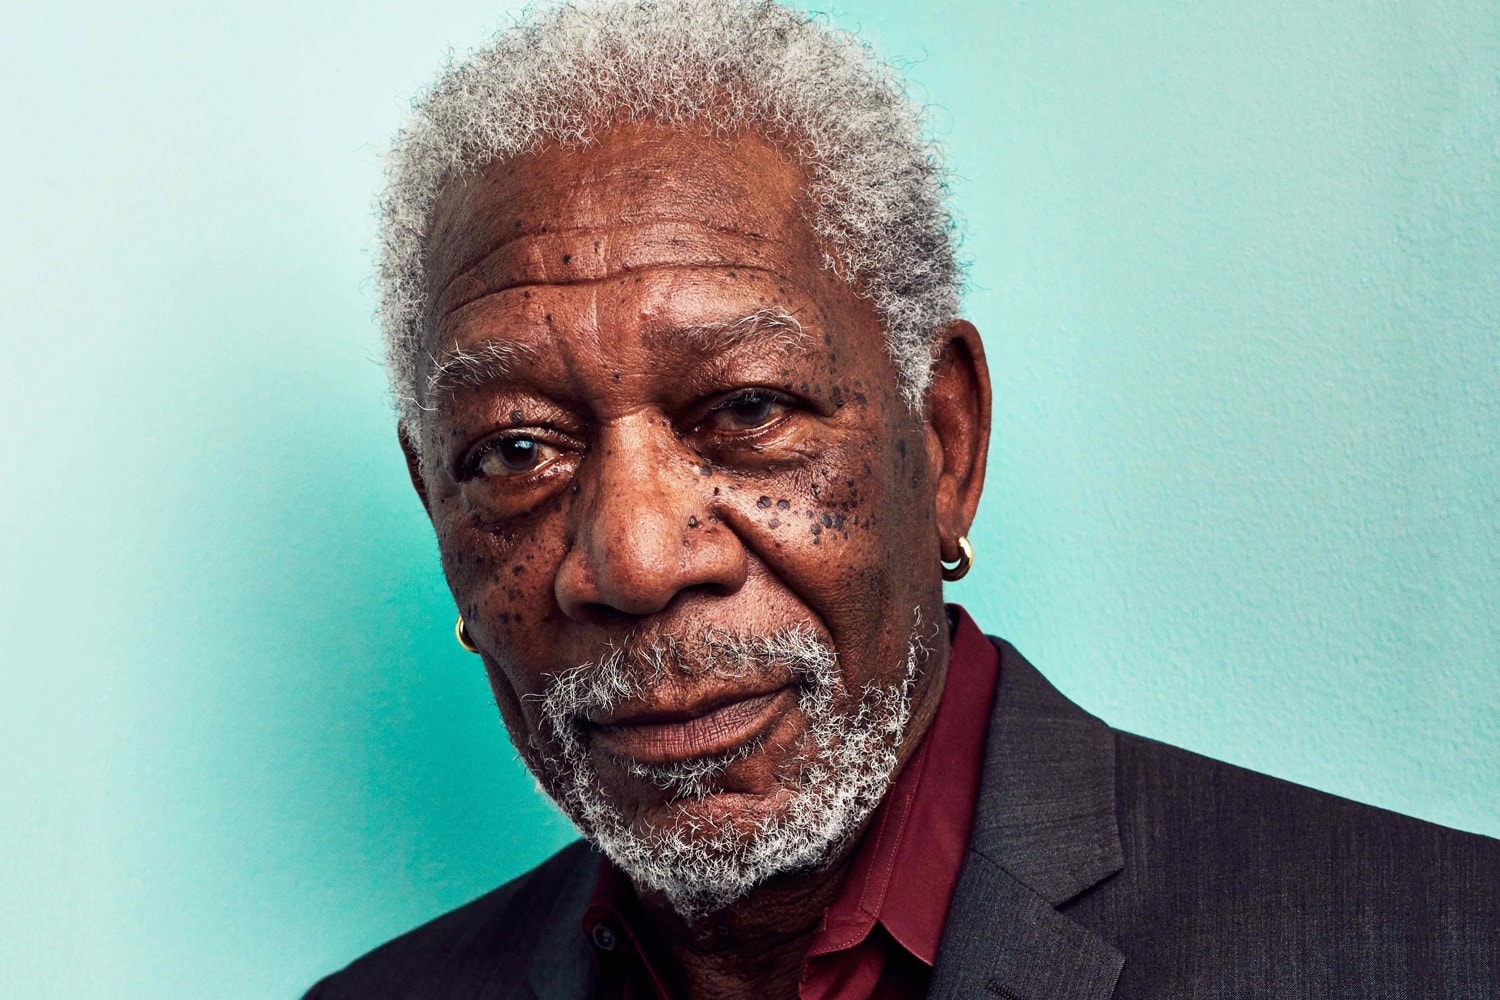 Morgan Freeman Accused of Sexual Misconduct